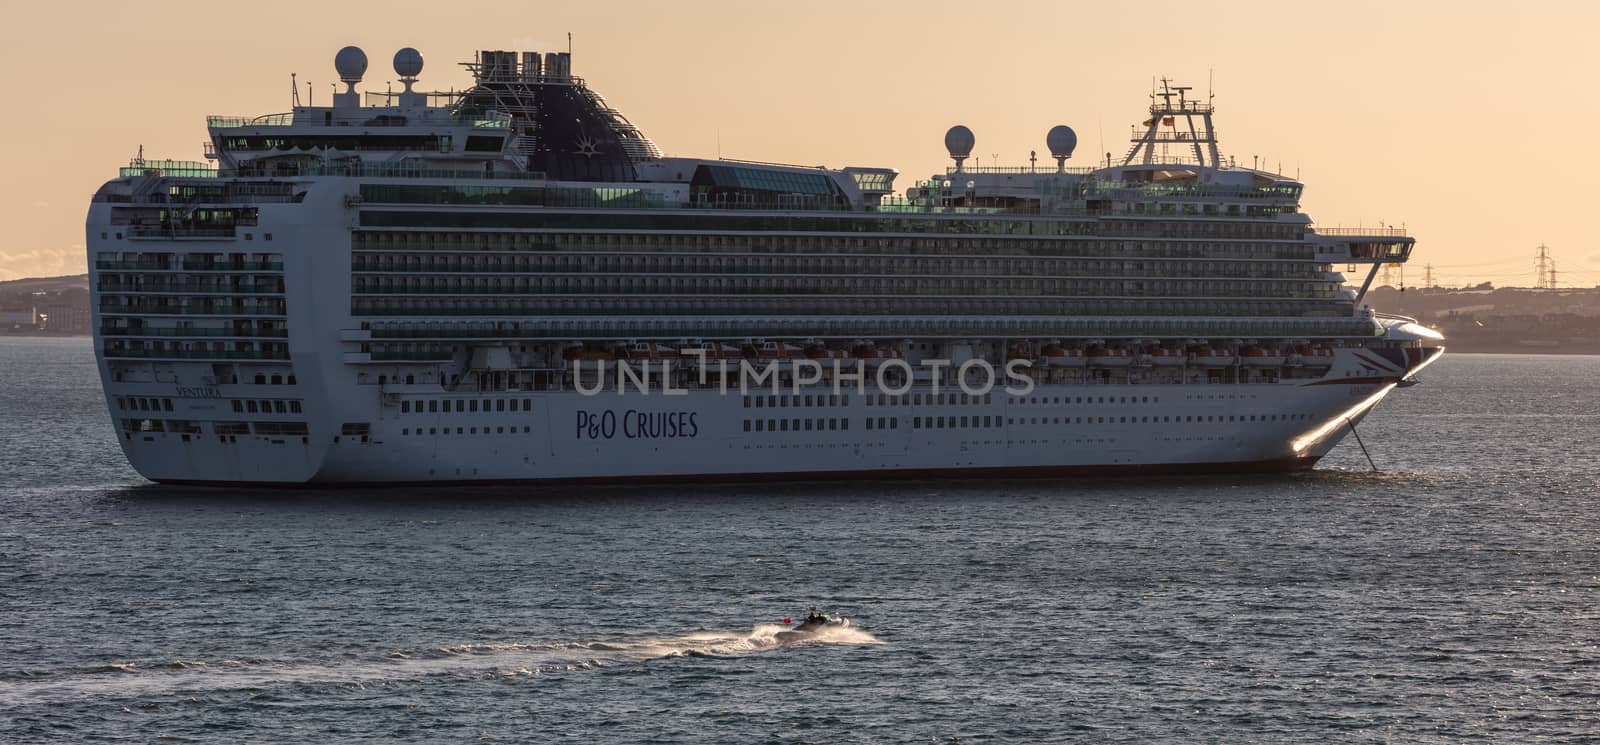 P&O cruise ship Ventura in Weymouth Bay by DamantisZ